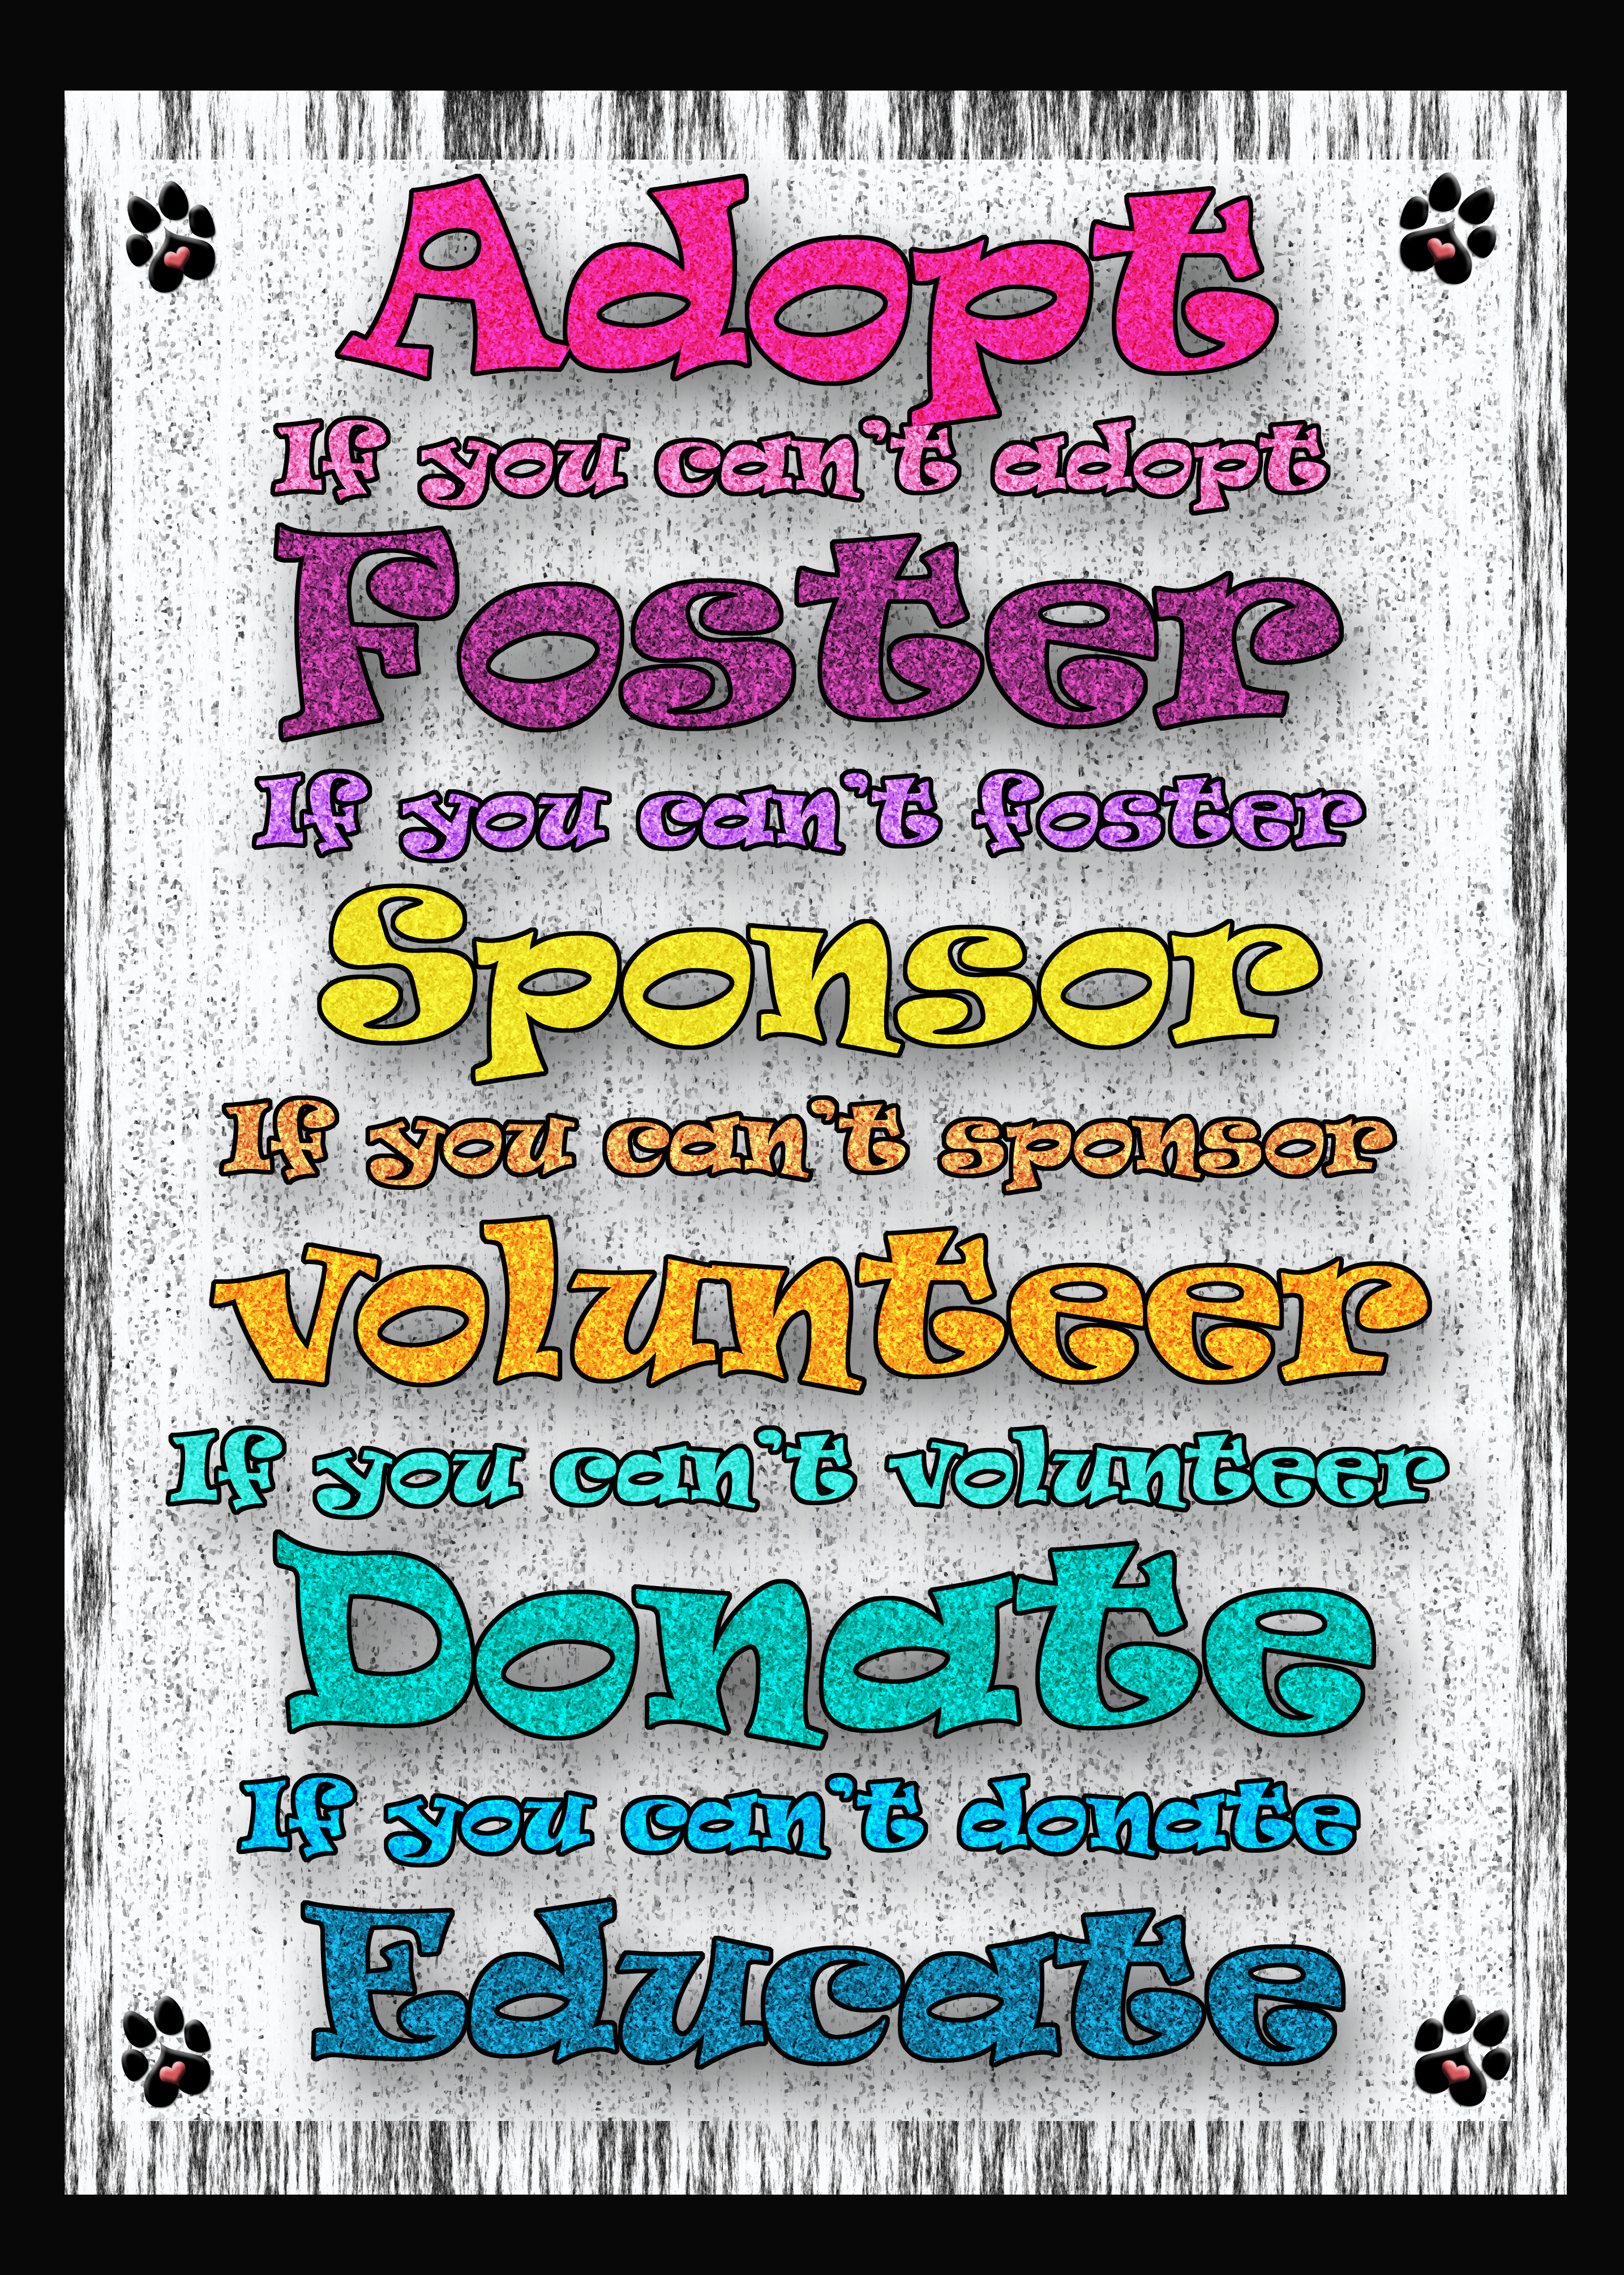 adopt foster spnosor volunteer donate educate